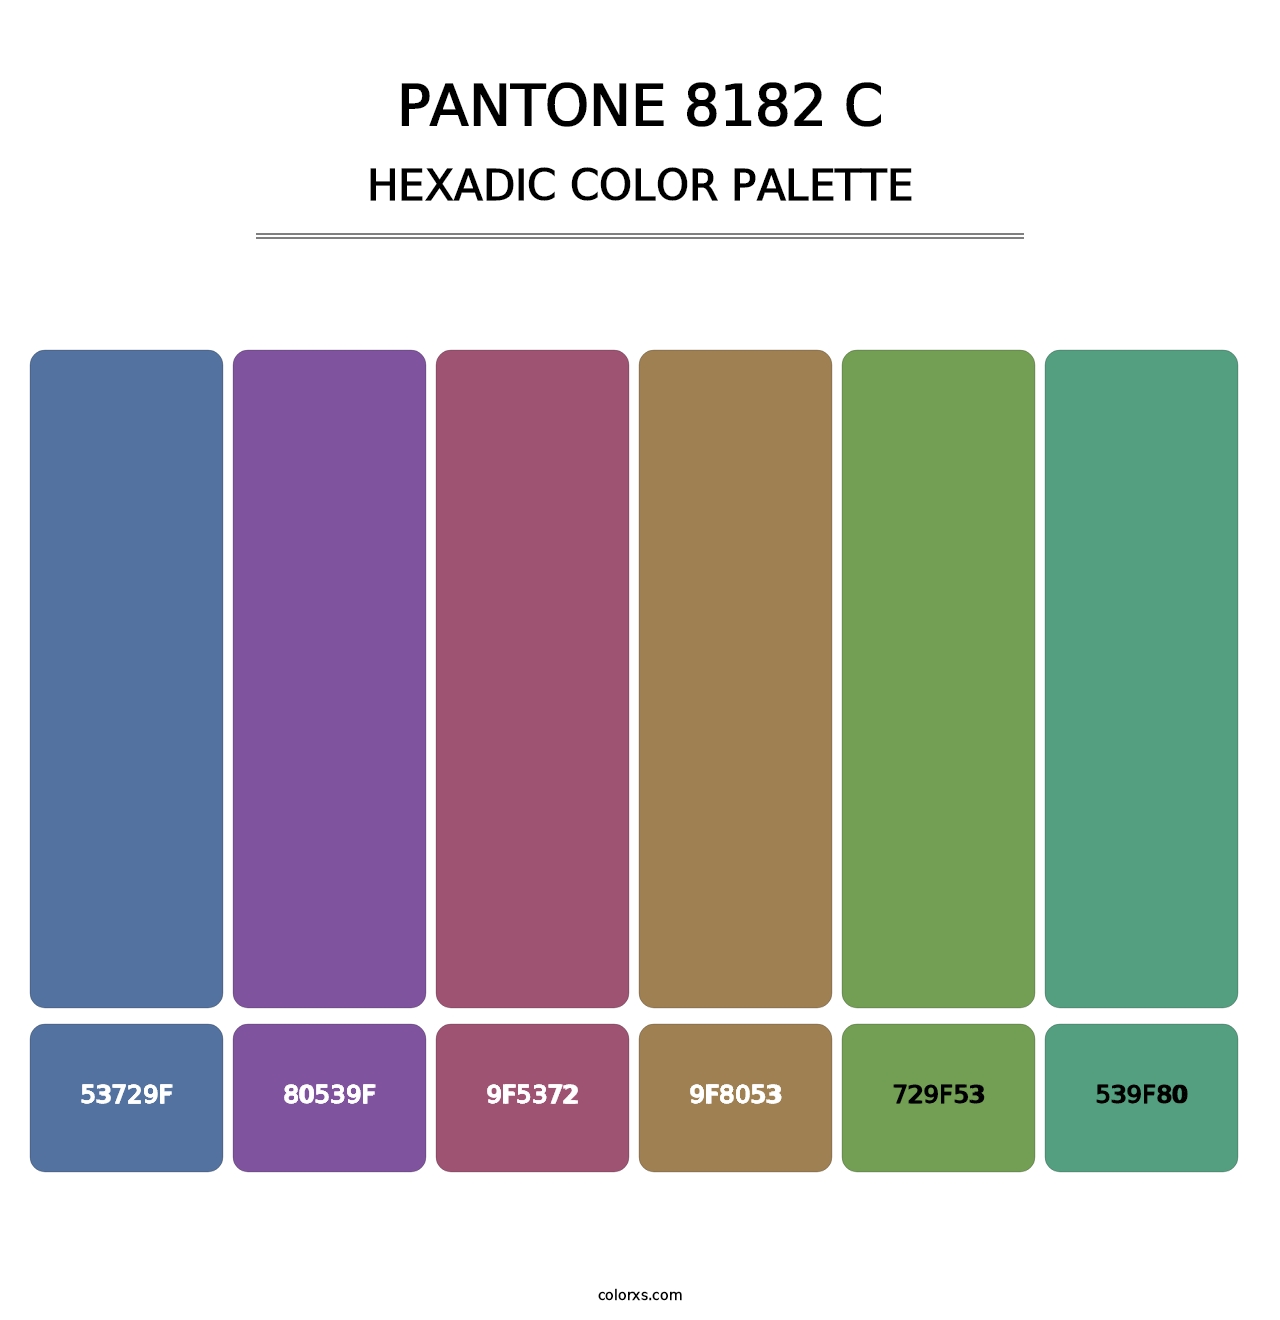 PANTONE 8182 C - Hexadic Color Palette